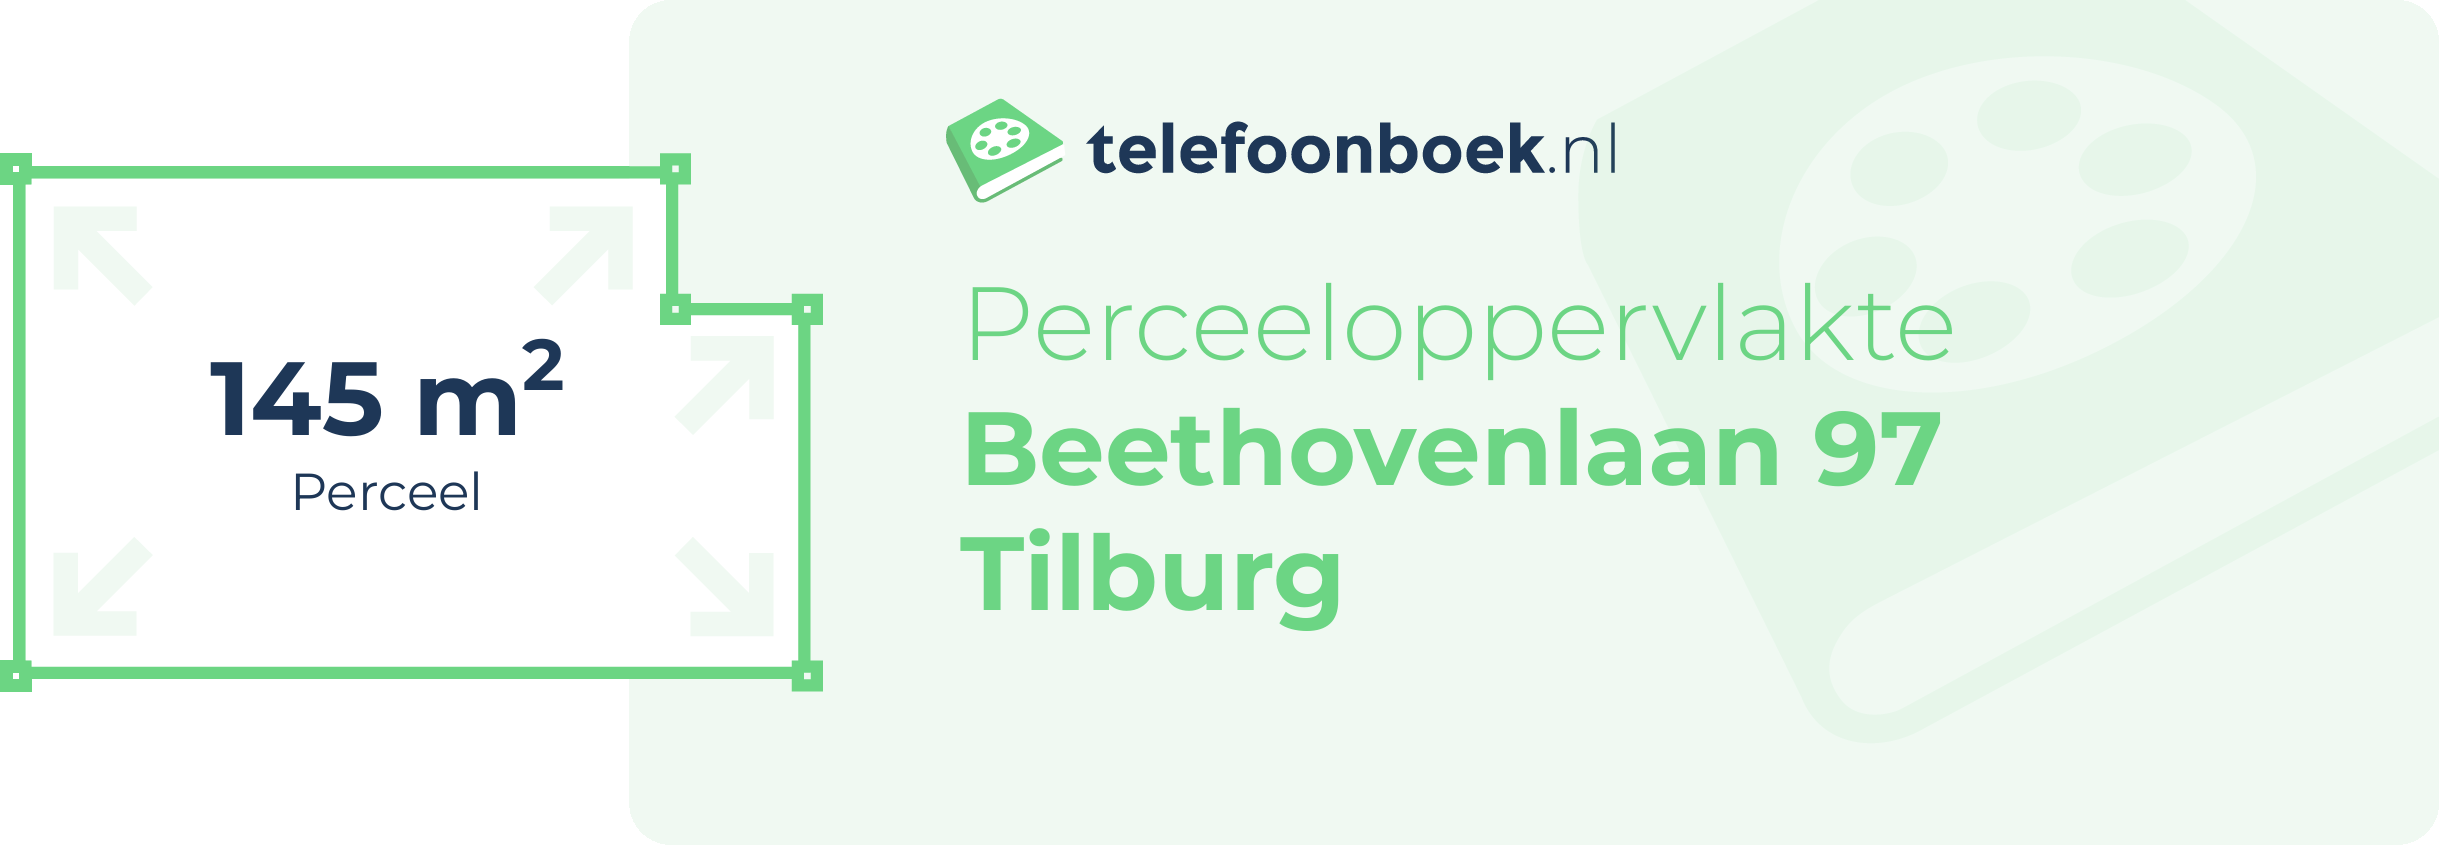 Perceeloppervlakte Beethovenlaan 97 Tilburg